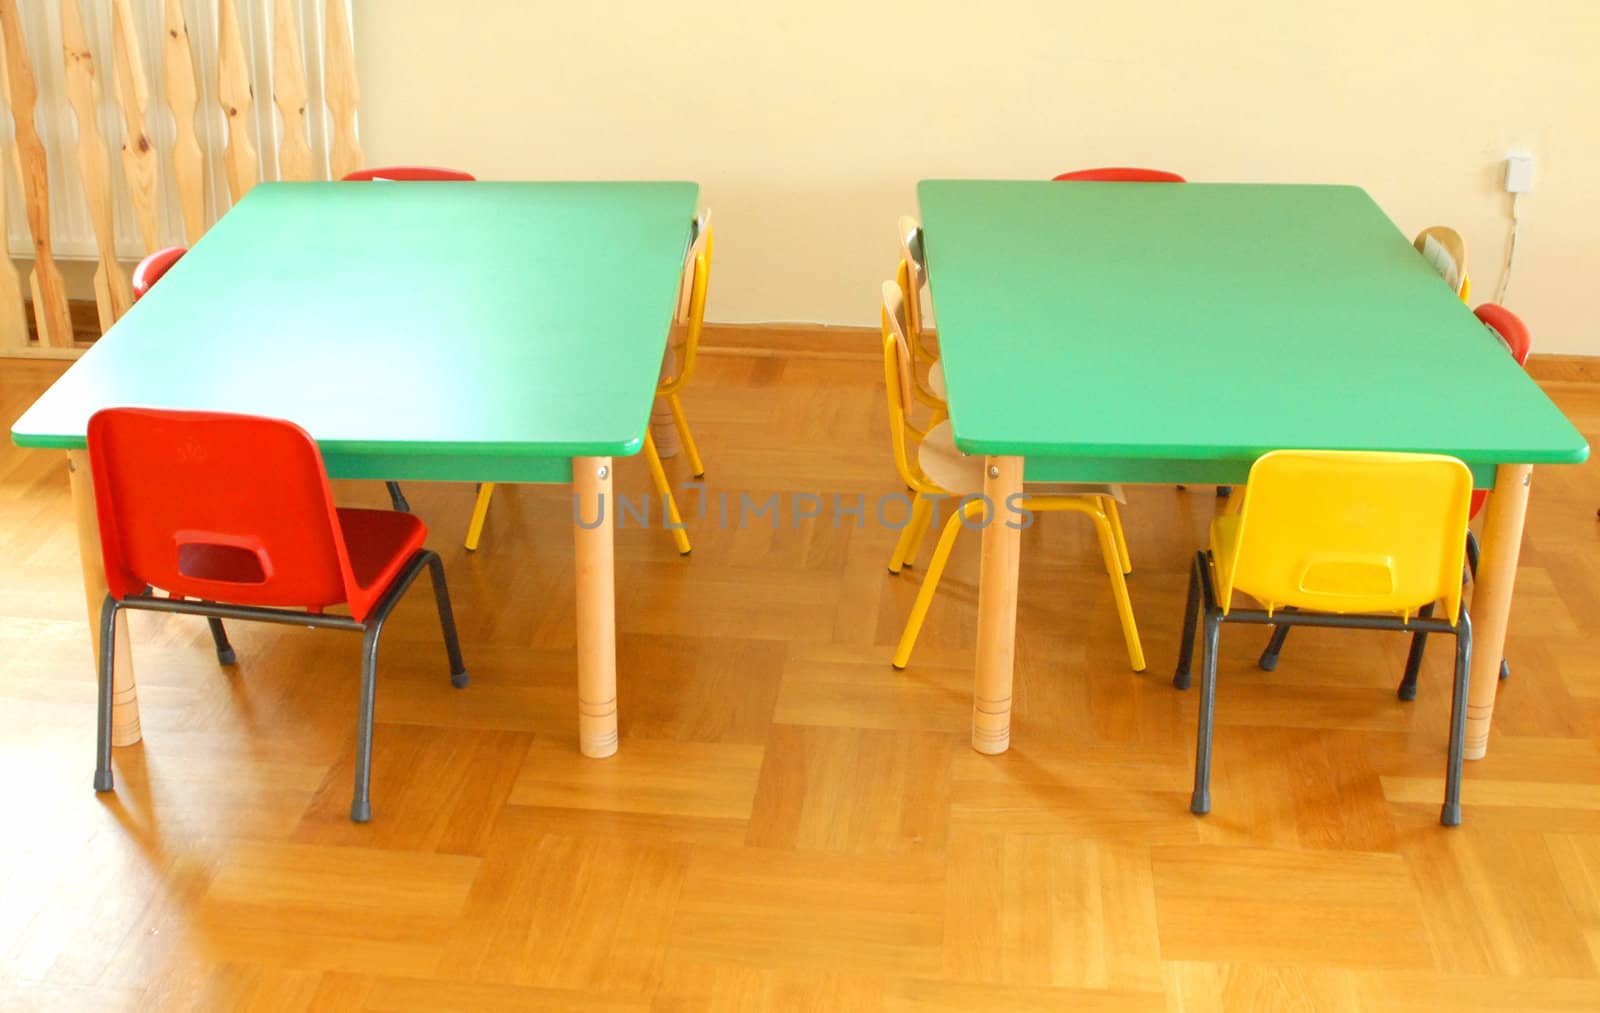 Preschool furnishings